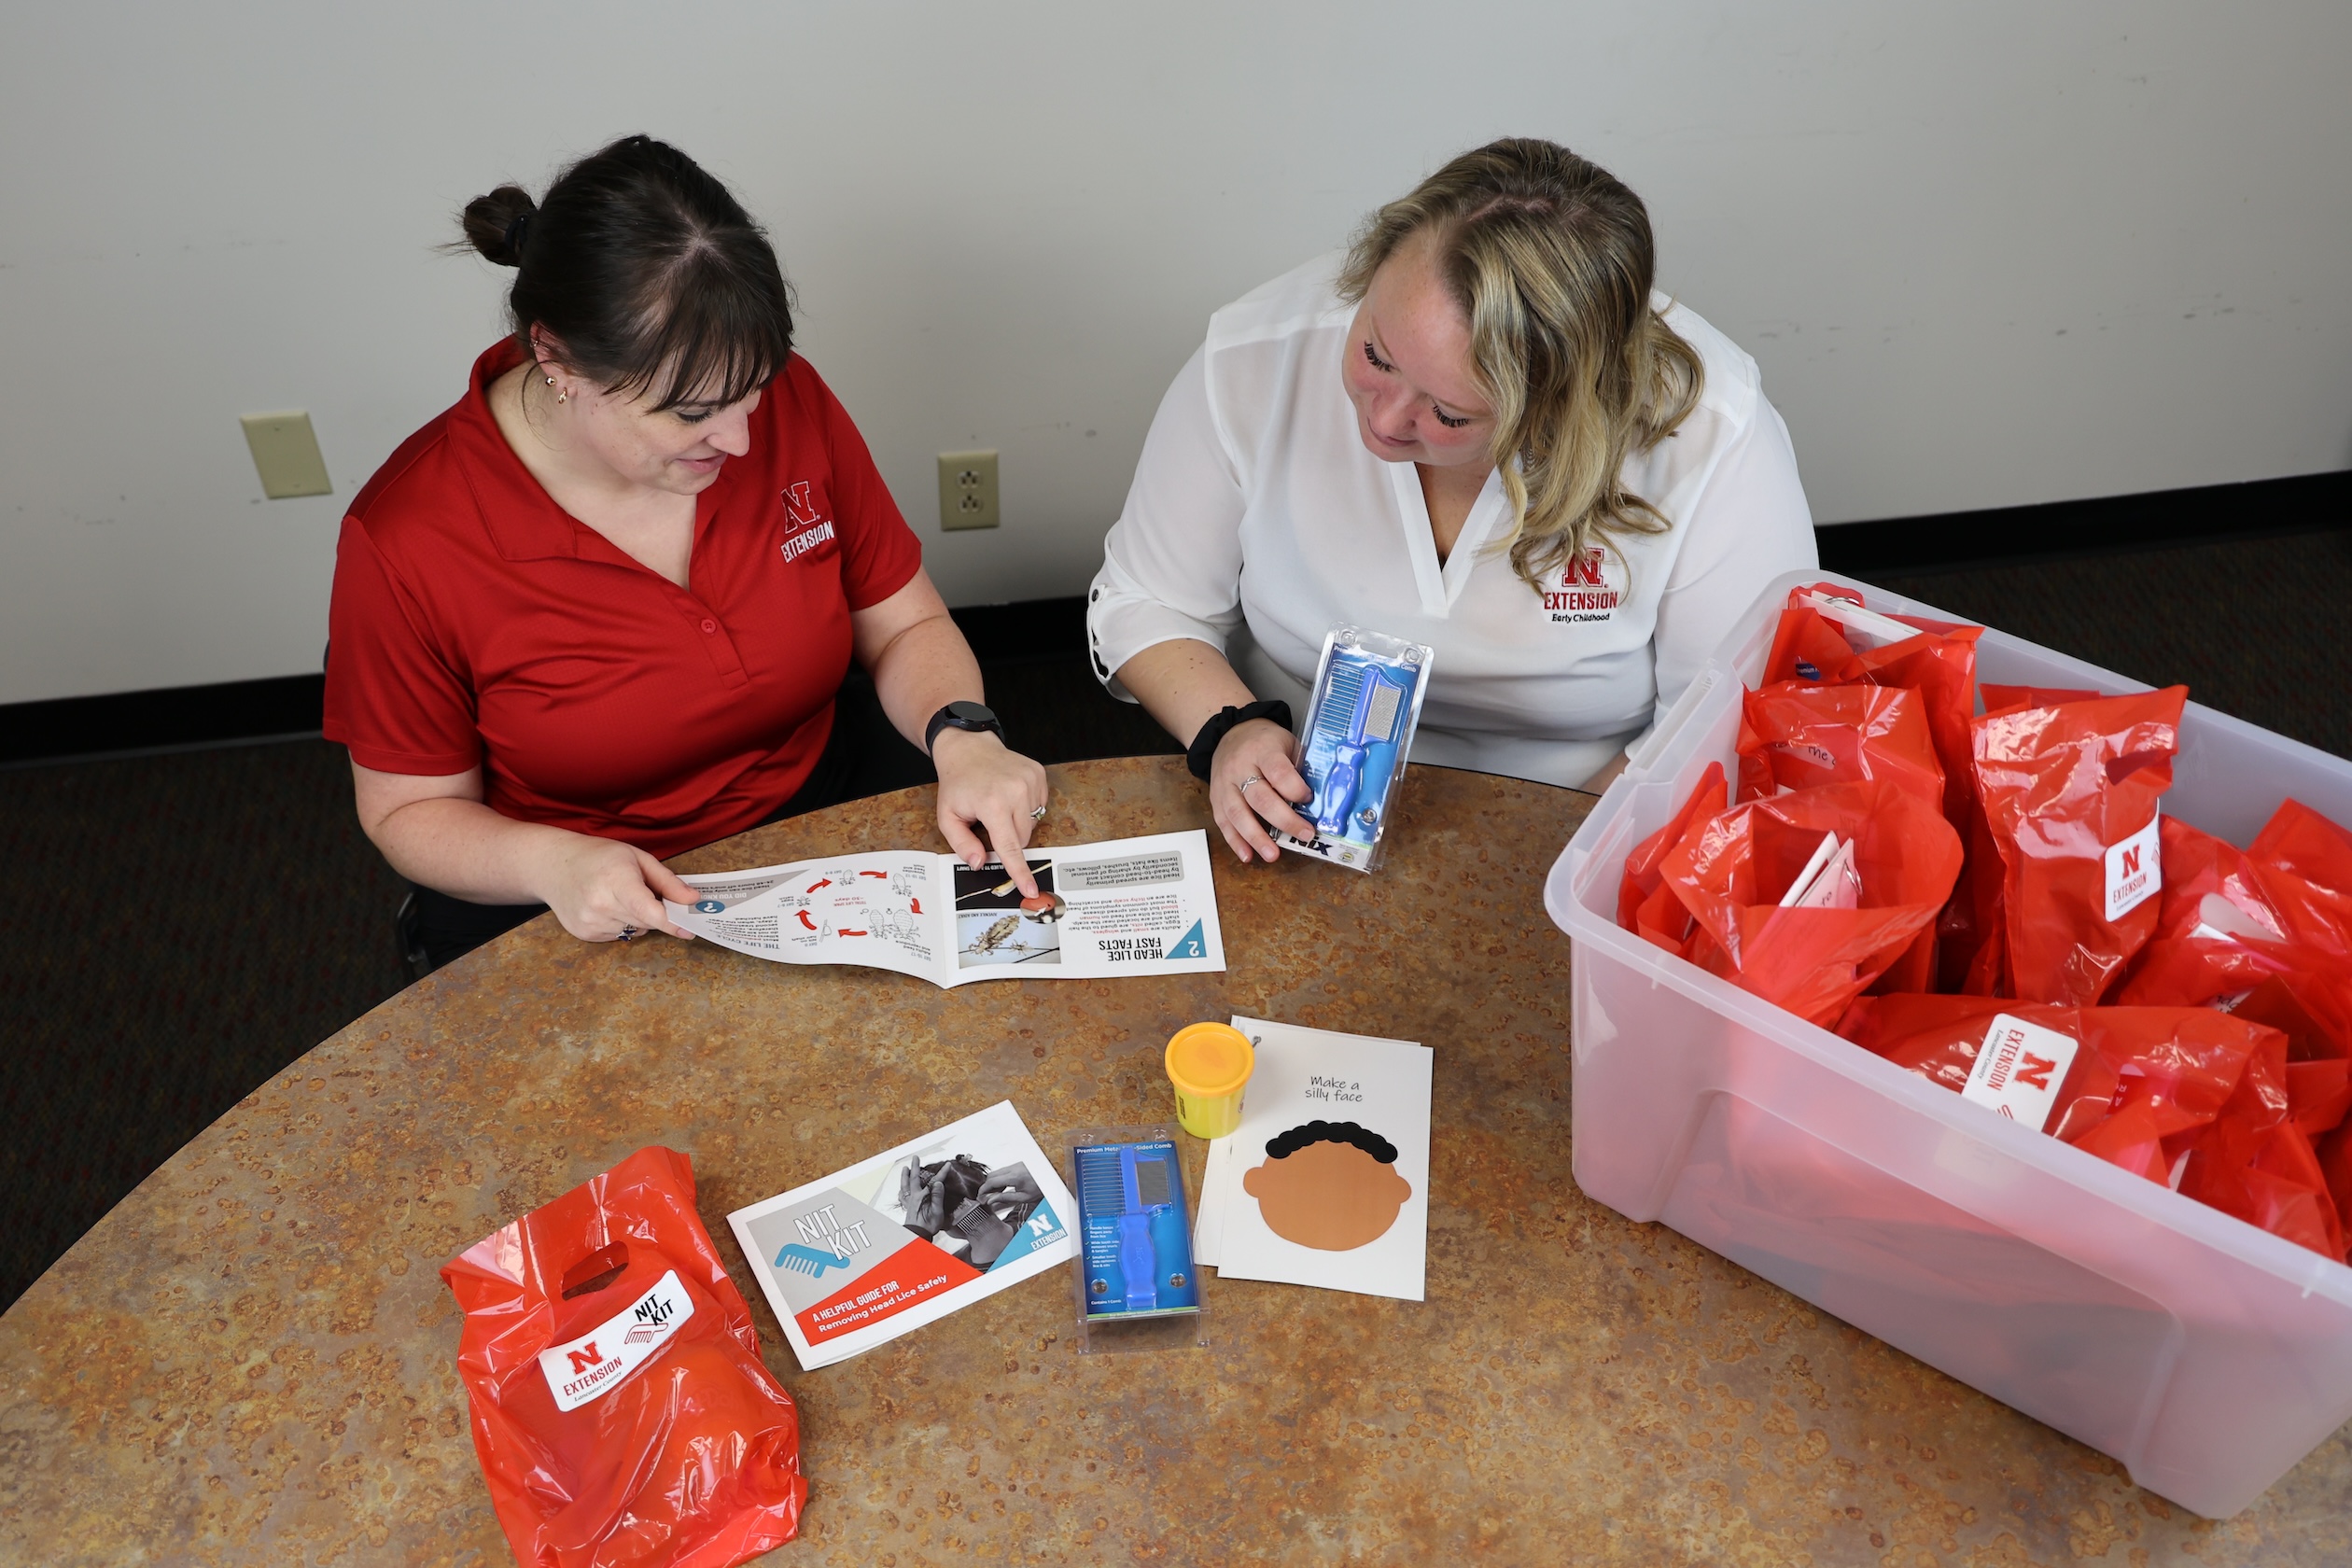 Nit Kit Program – Head lice resources for Nebraskans who need them